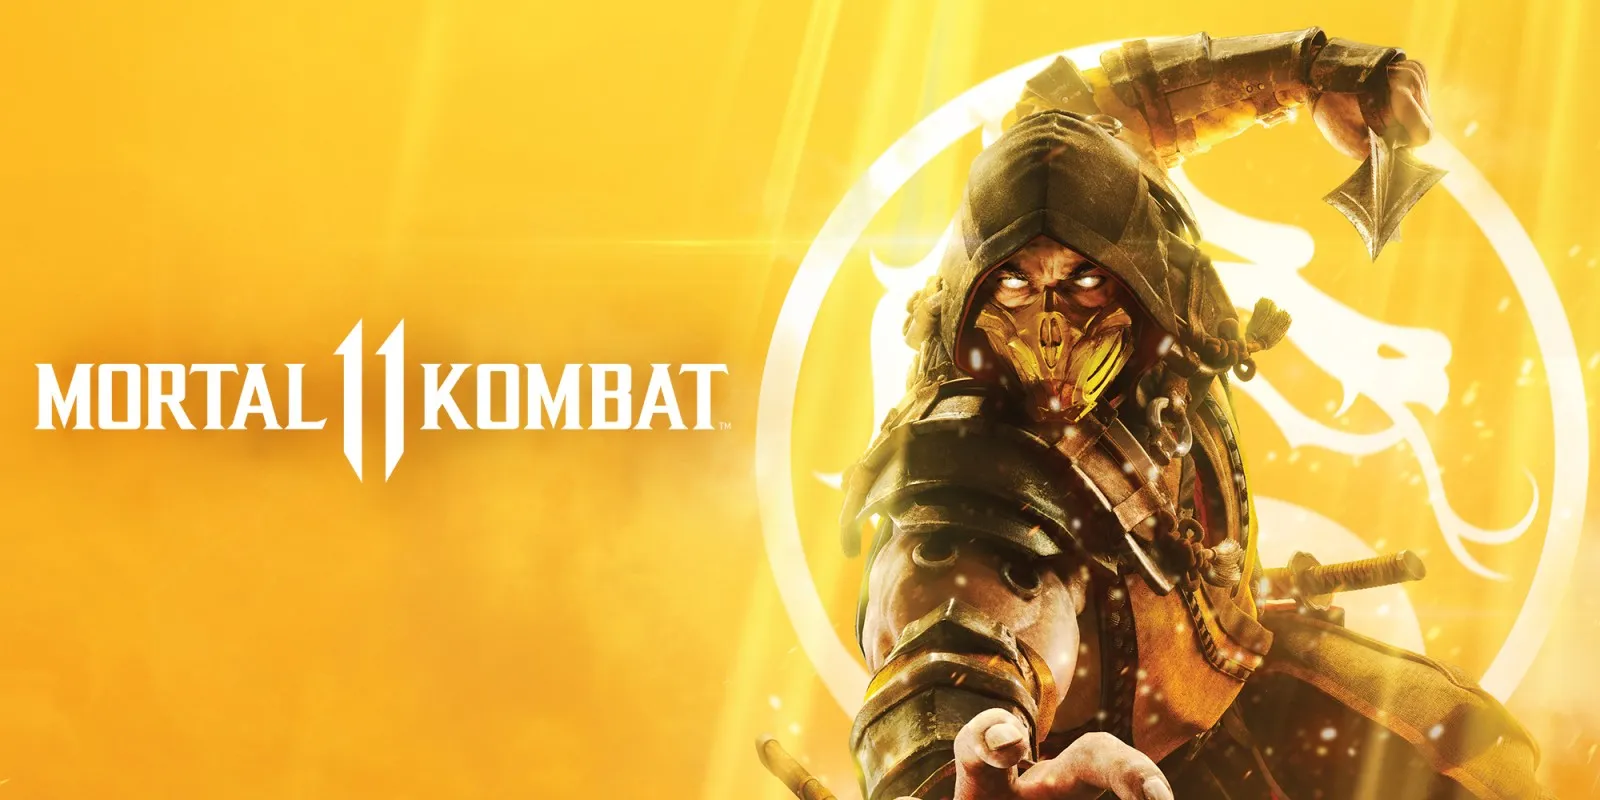 Mortal Kombat 11 game promotional artwork